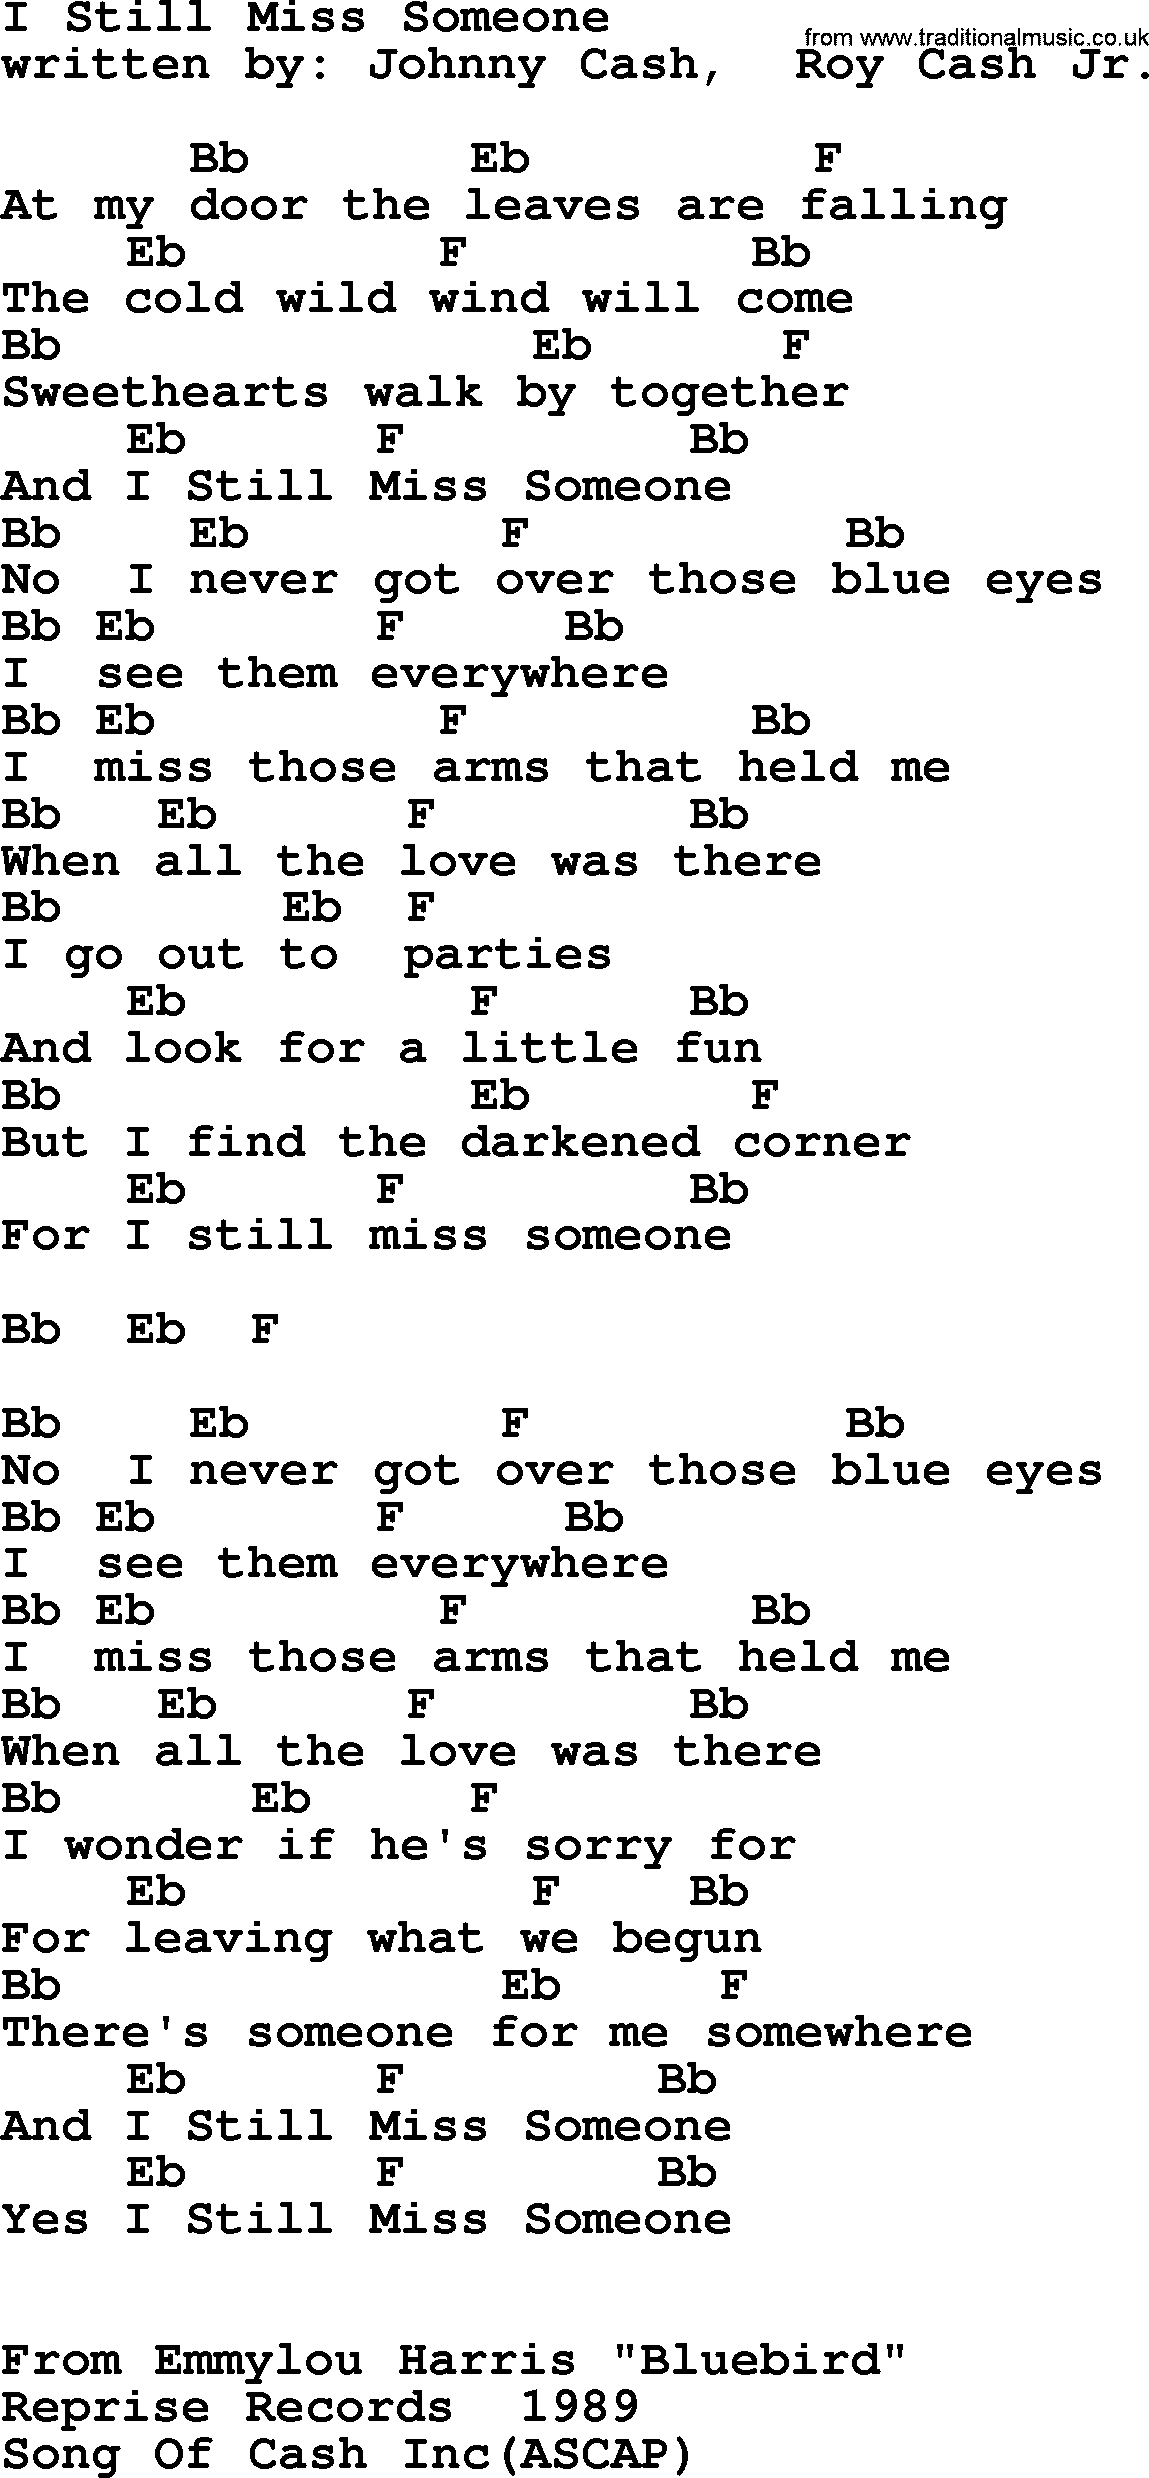 Emmylou Harris song: I Still Miss Someone lyrics and chords